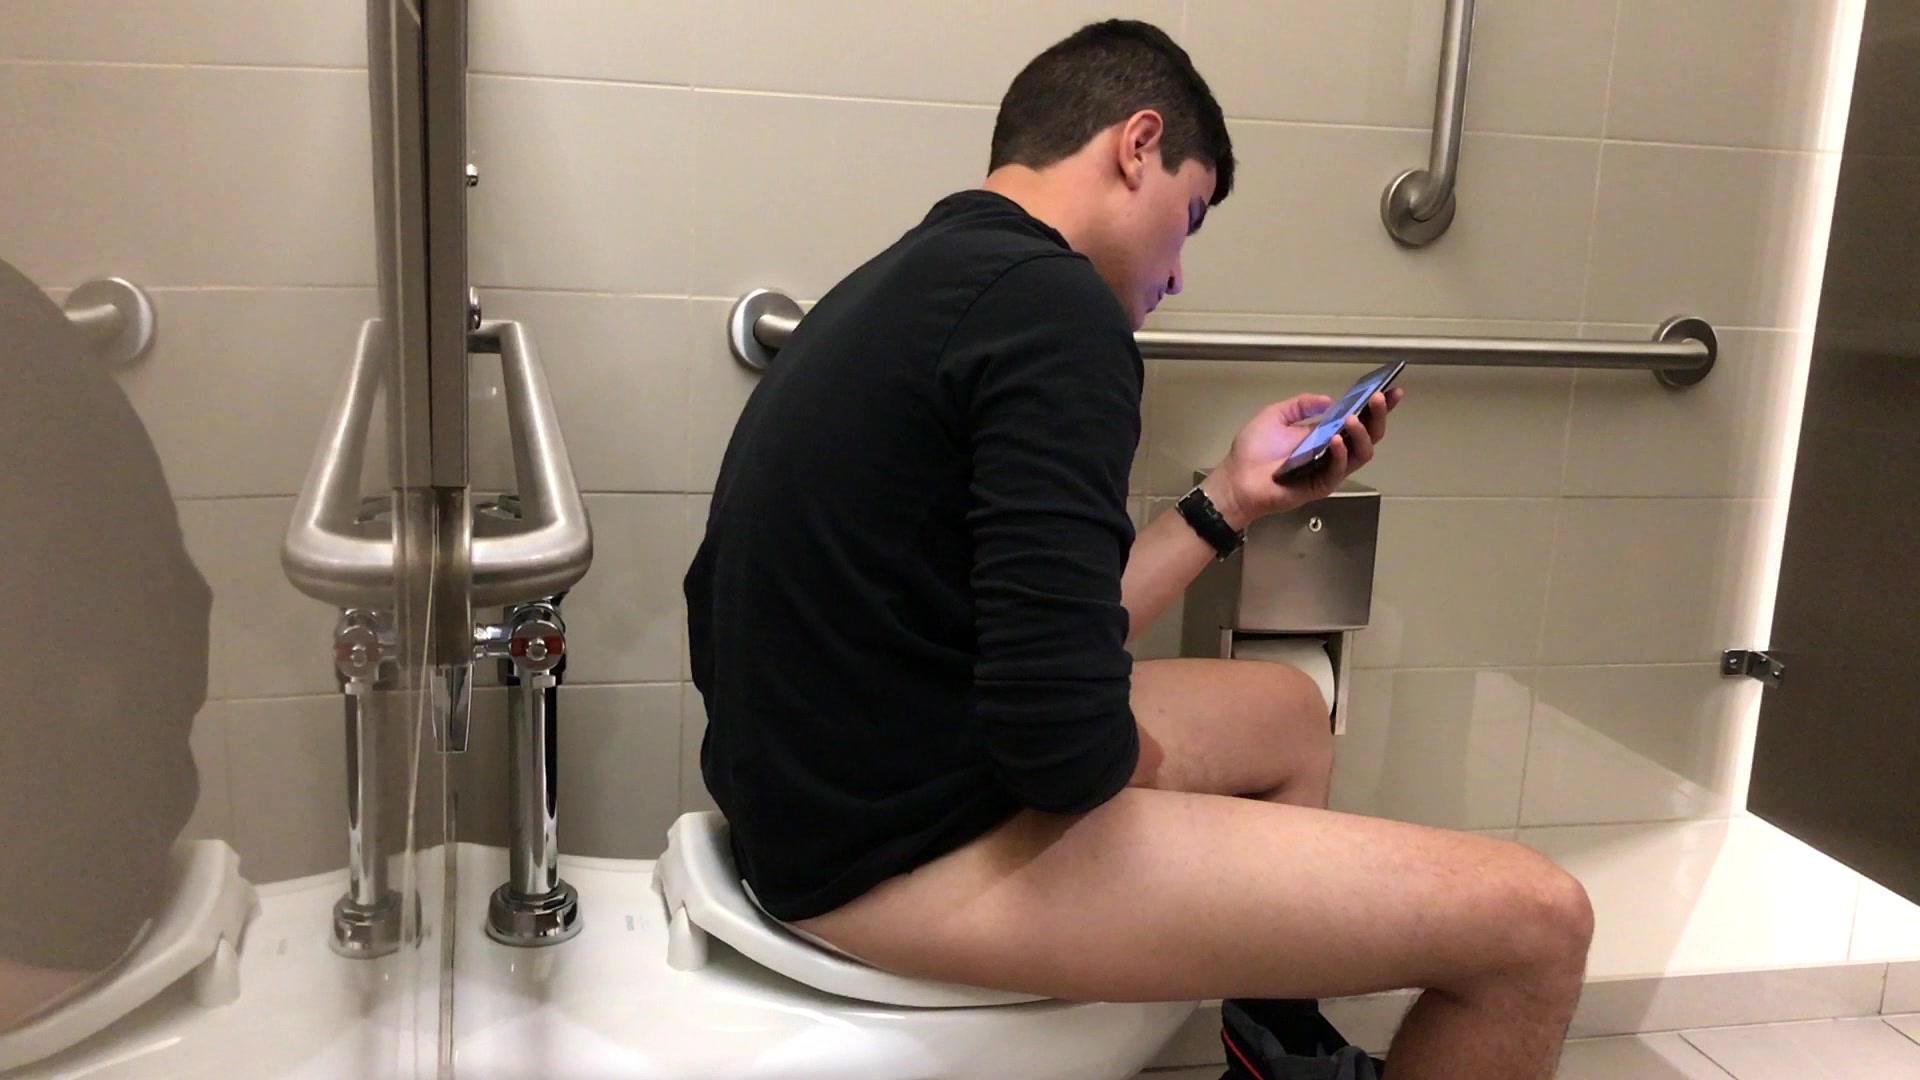 Jerking off in public restroom